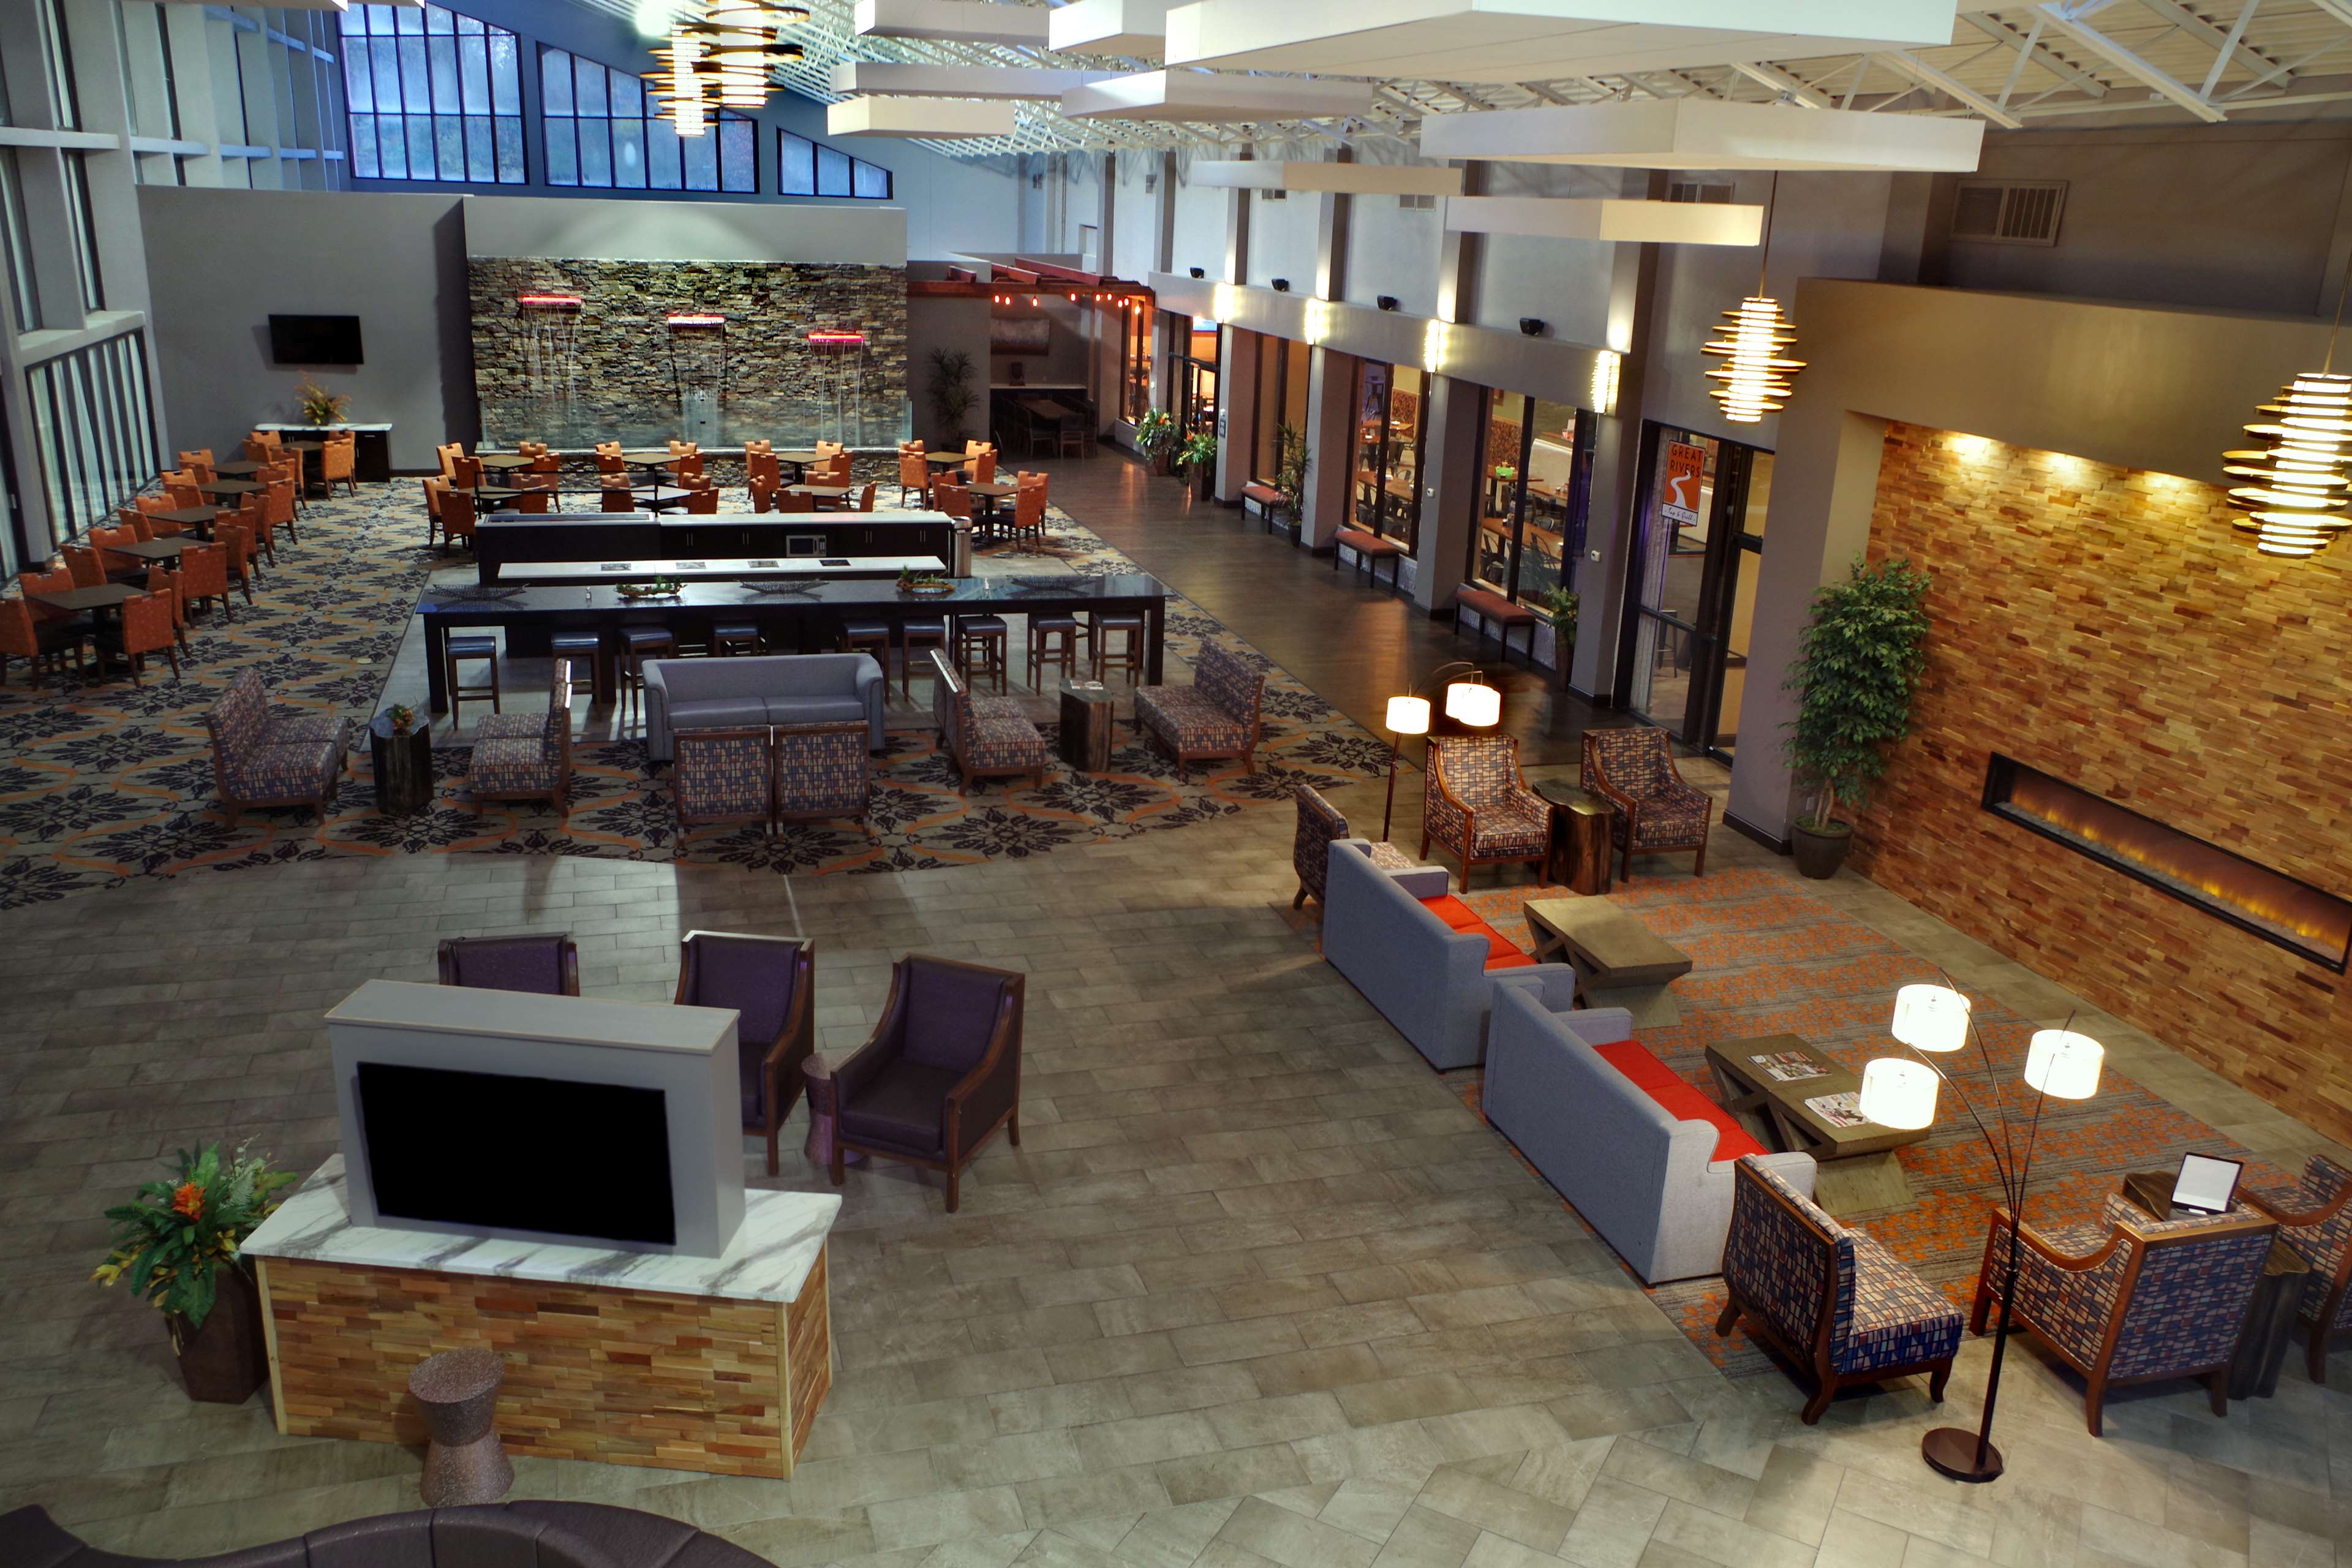 Best Western Premier Alton-St. Louis Area Hotel Photo